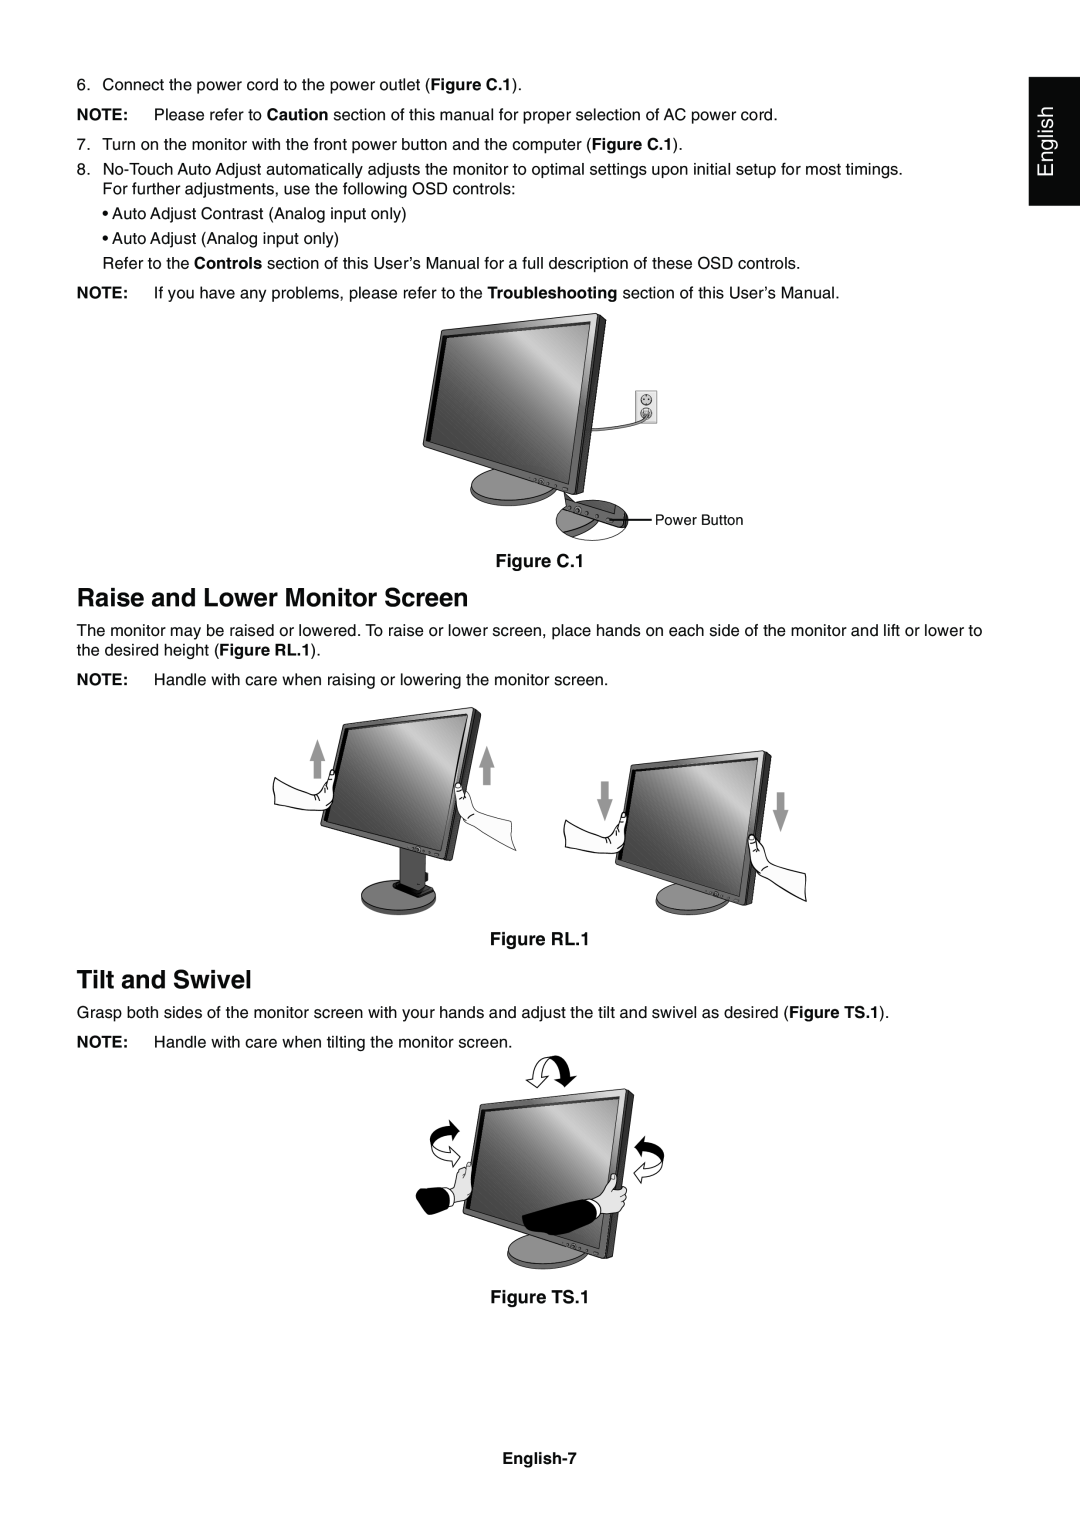 NEC E201W user manual Raise and Lower Monitor Screen, Tilt and Swivel, English, Figure C.1, Figure RL.1, Figure TS.1 